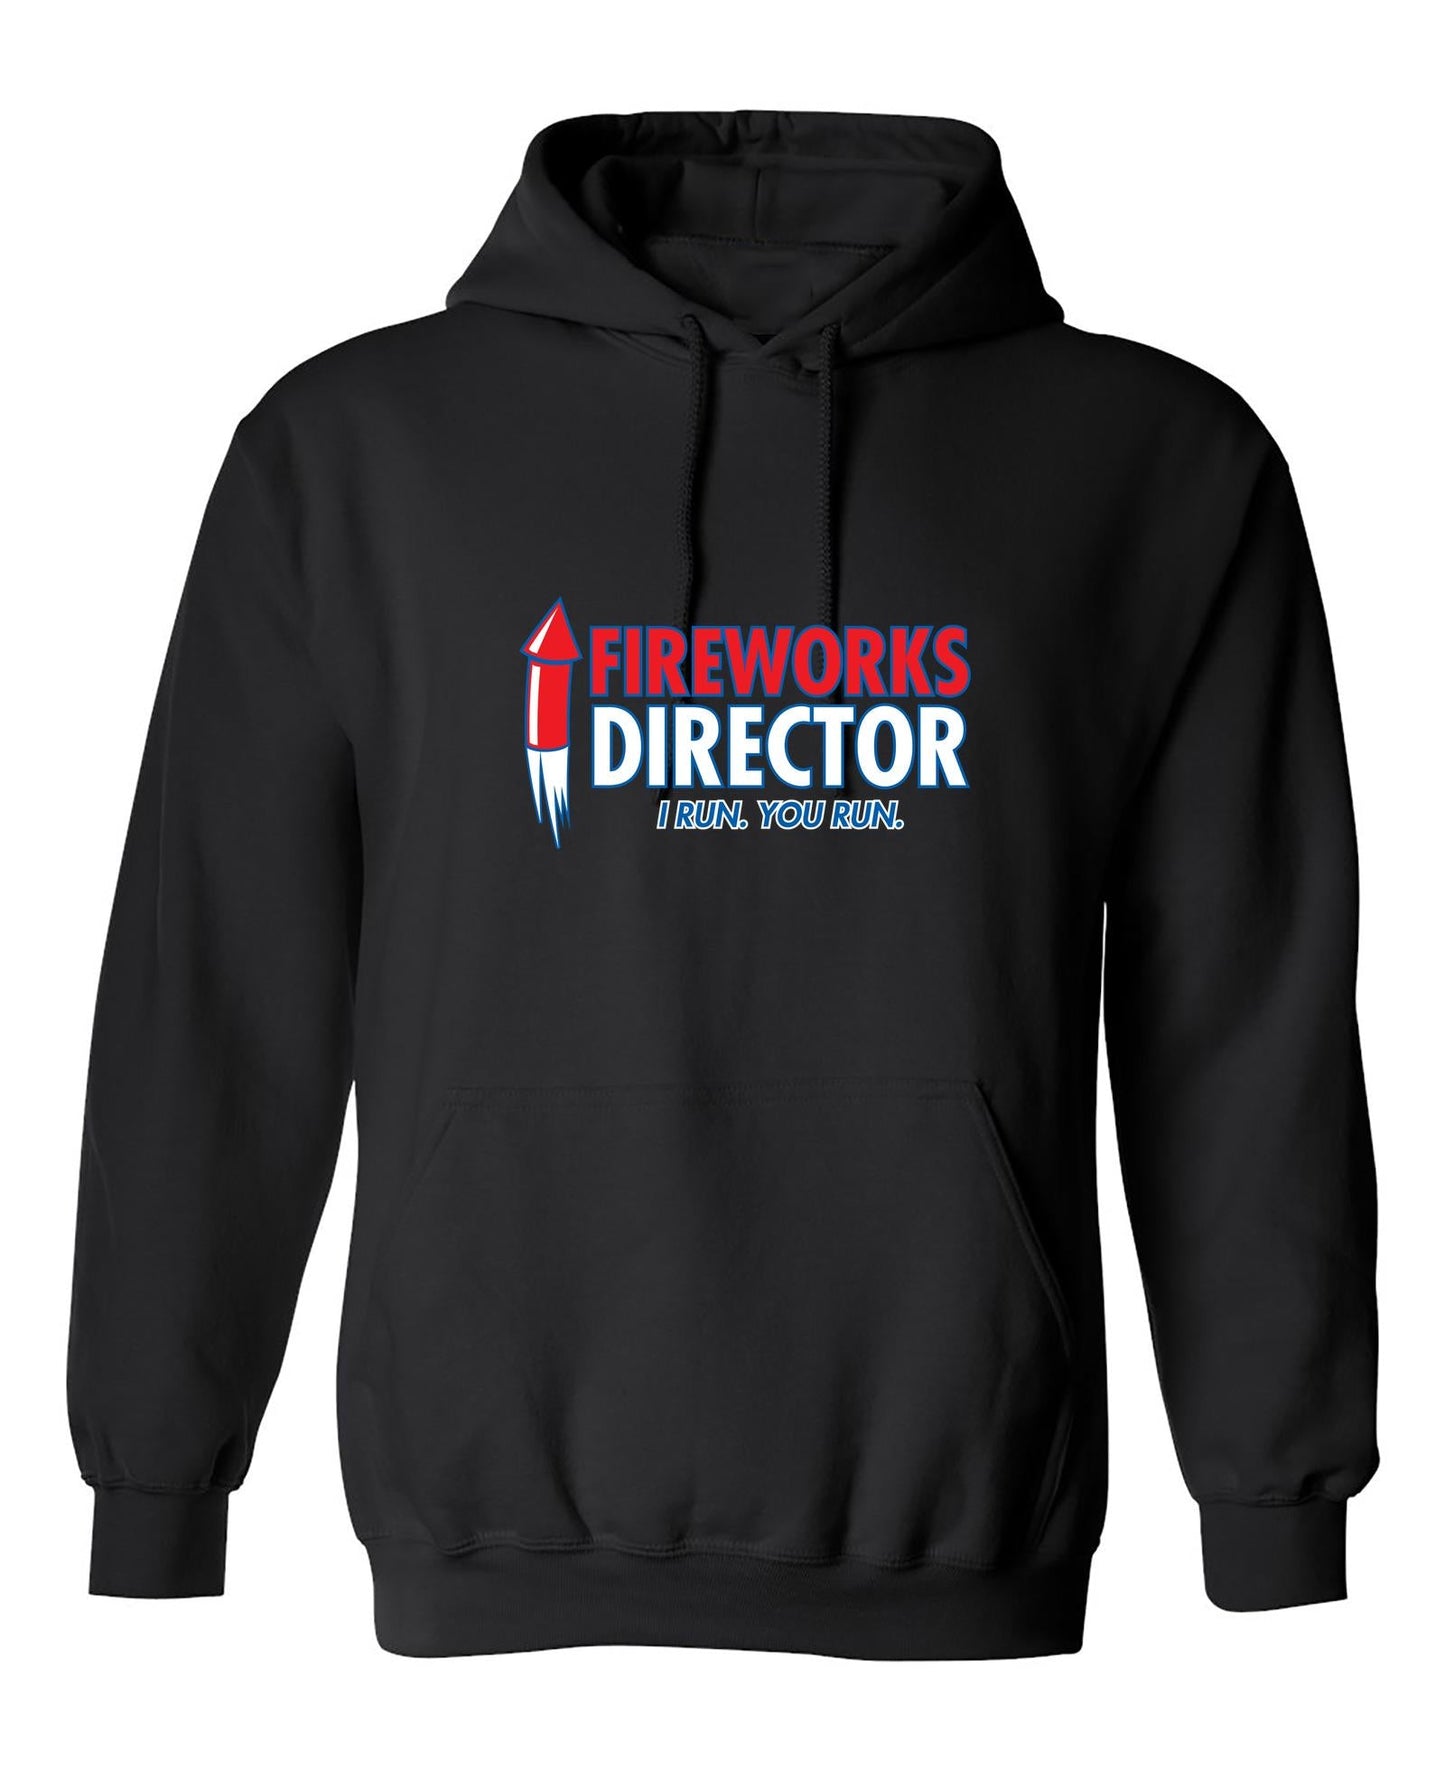 Funny T-Shirts design "Fireworks Director. I Run, You Run"